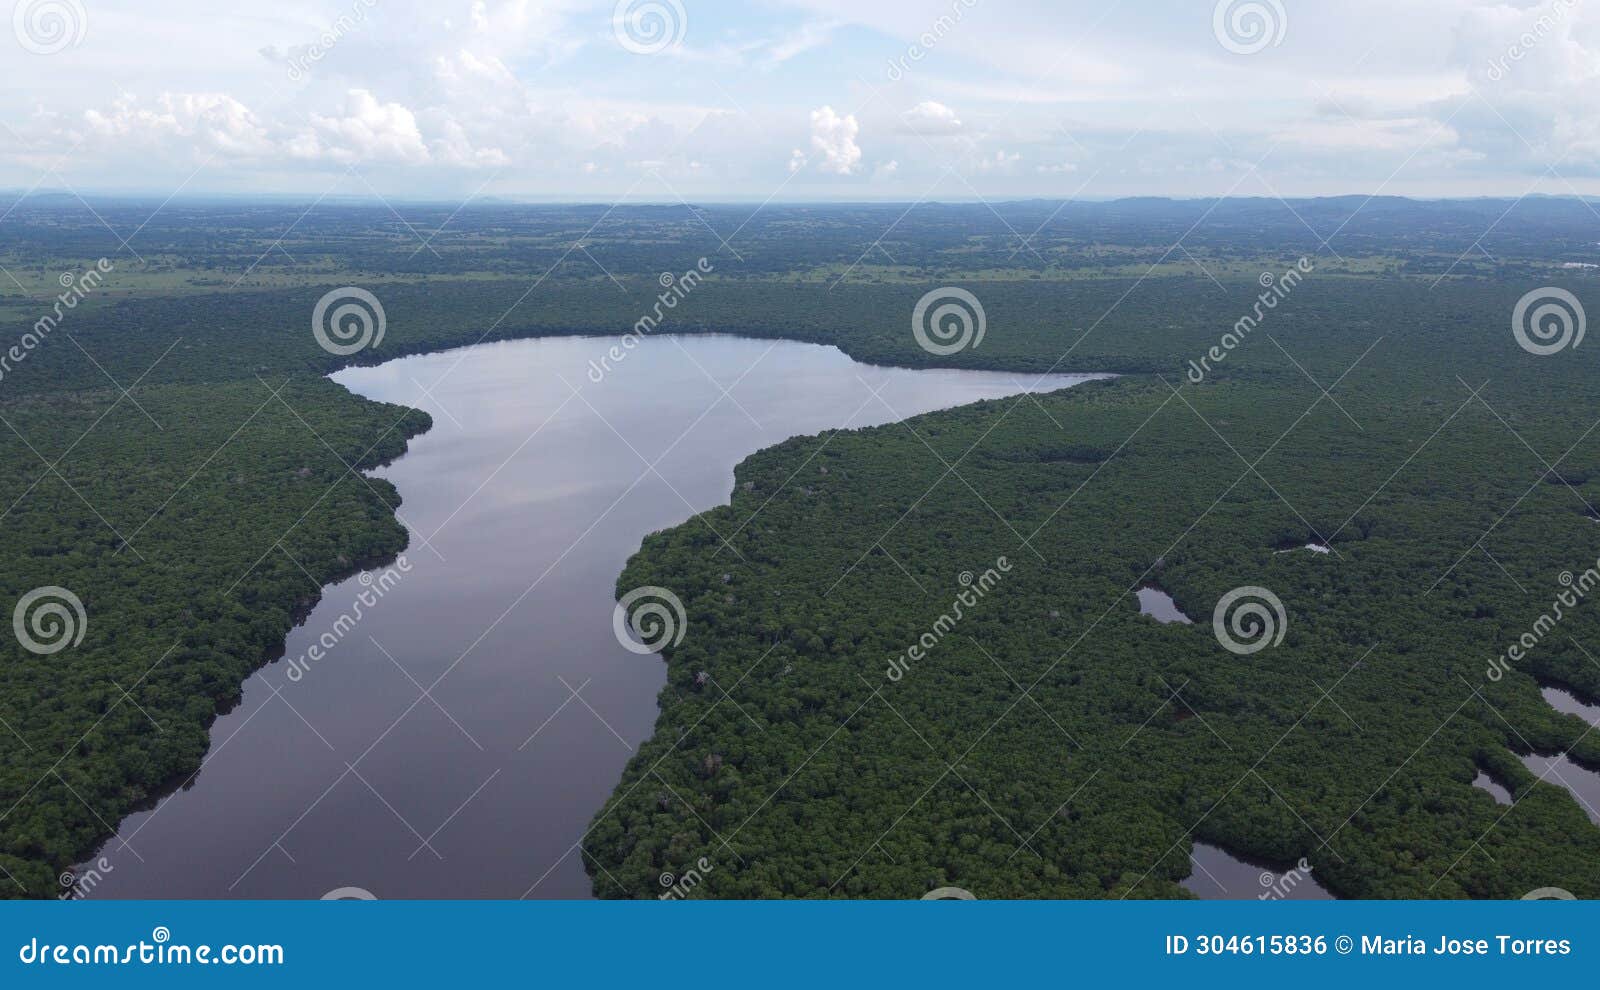 cienaga la caimanera landscape photography with drone over colombia